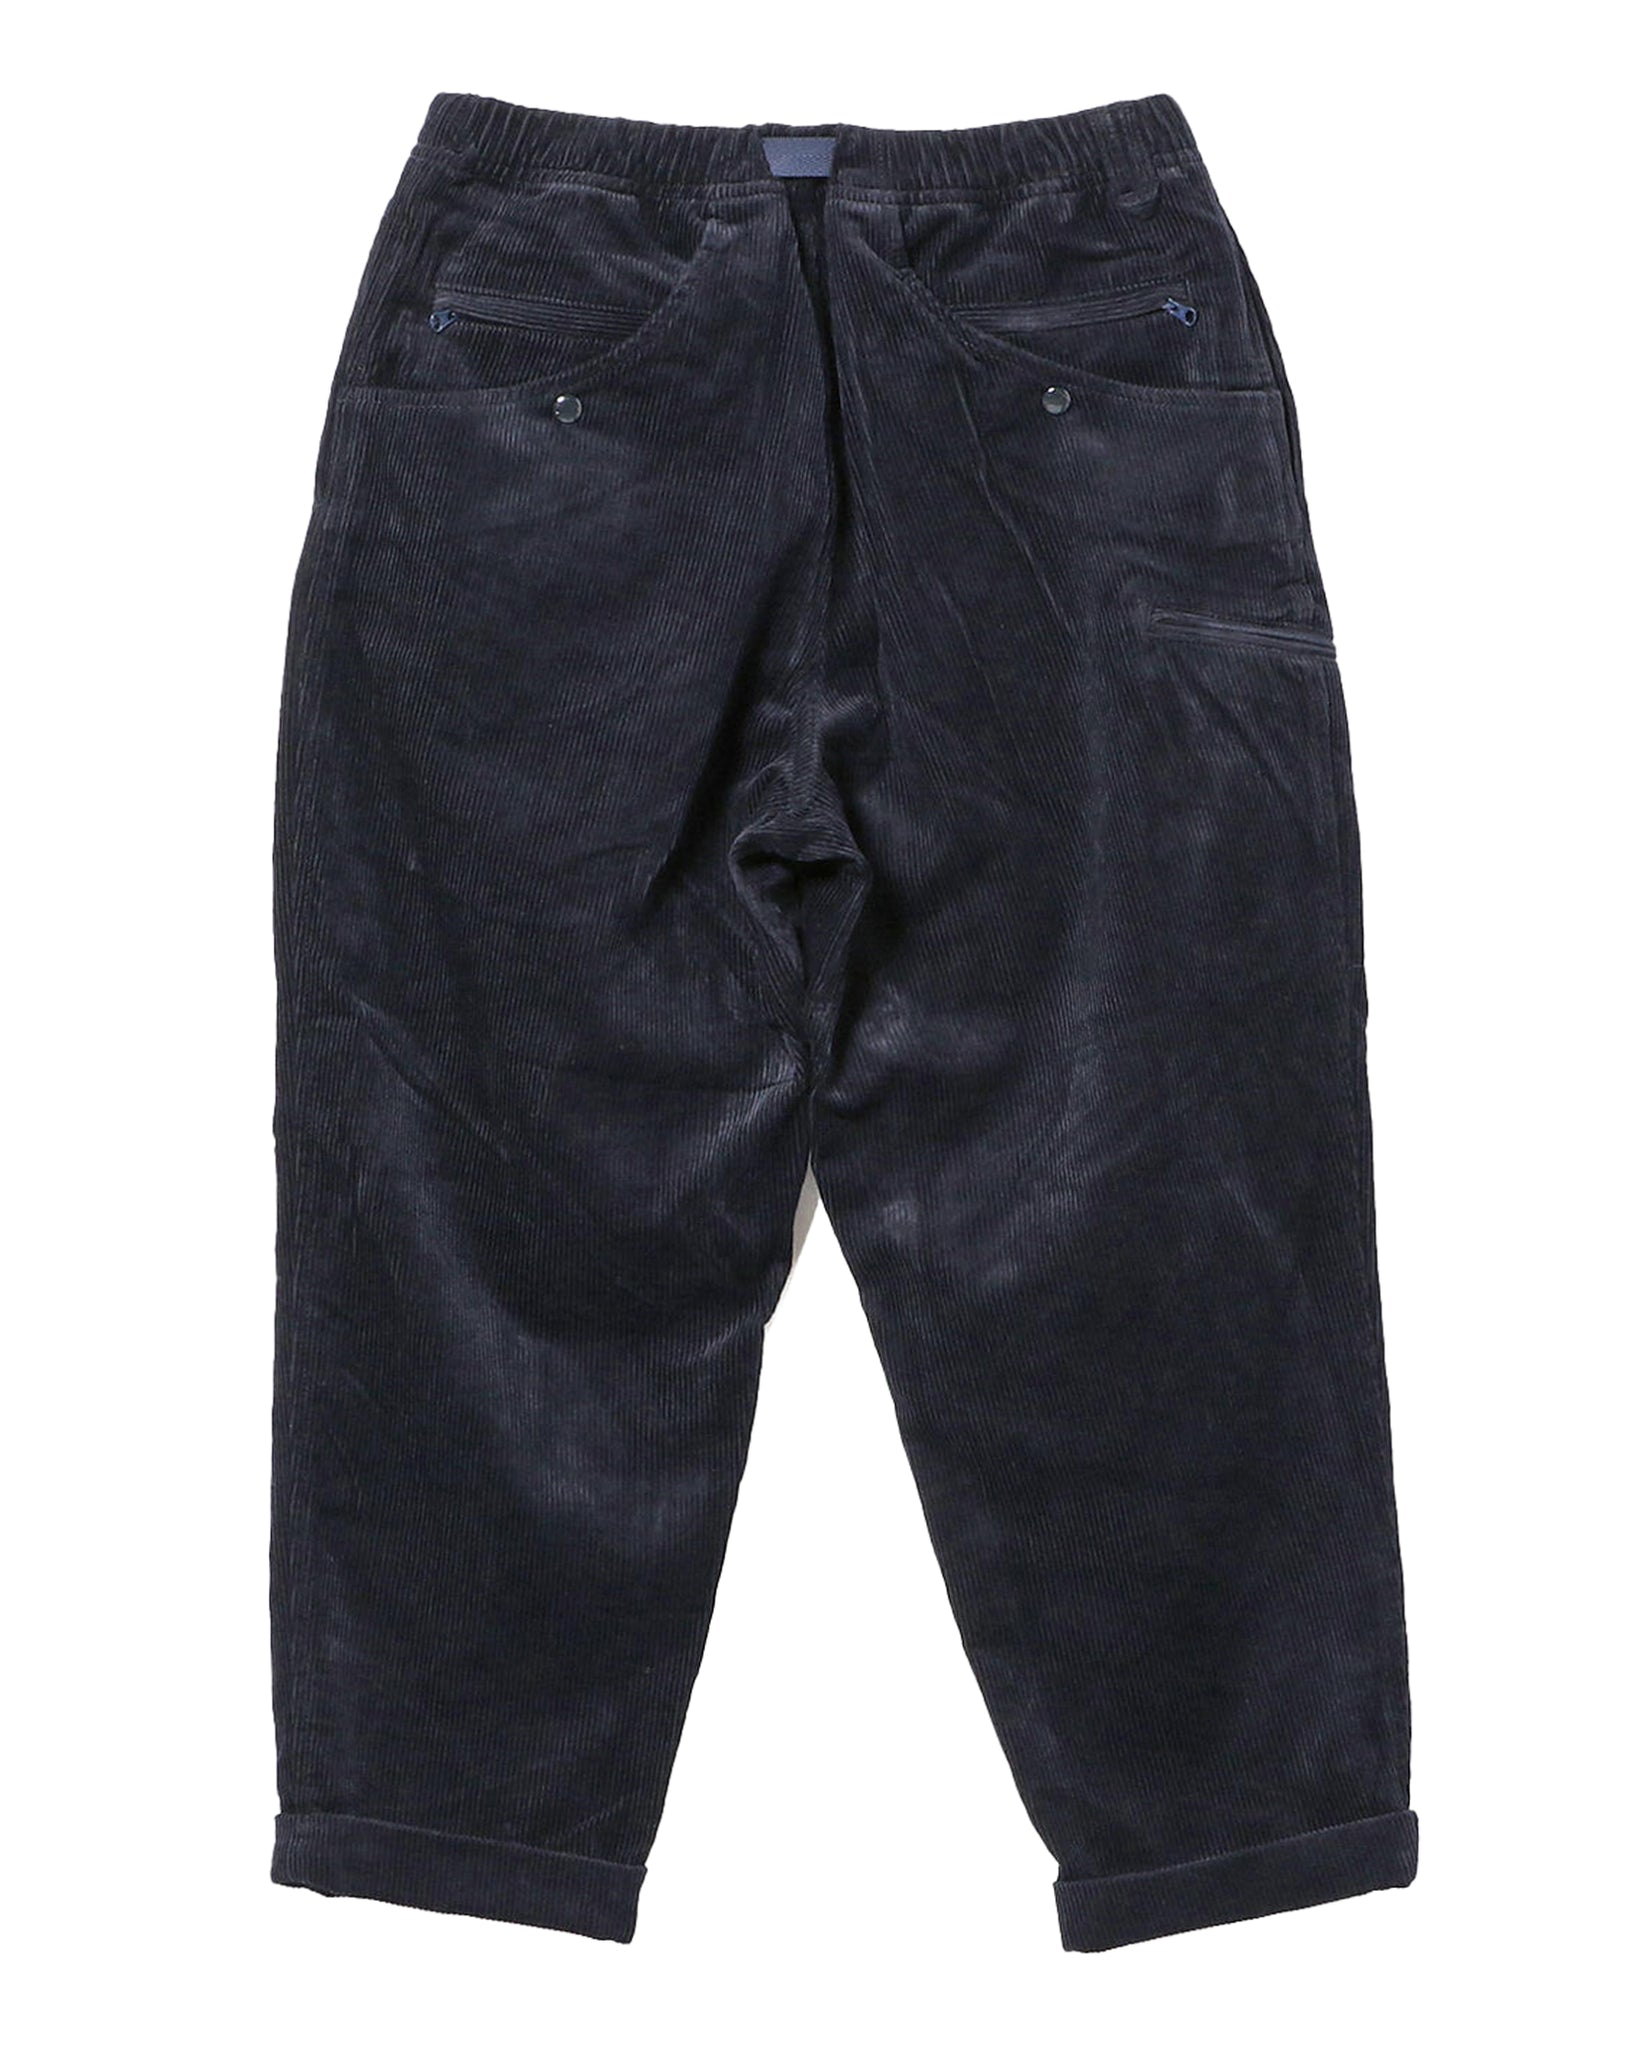 Black Diamond Spire Pants - Climbing Trousers Men's | Buy online |  Alpinetrek.co.uk